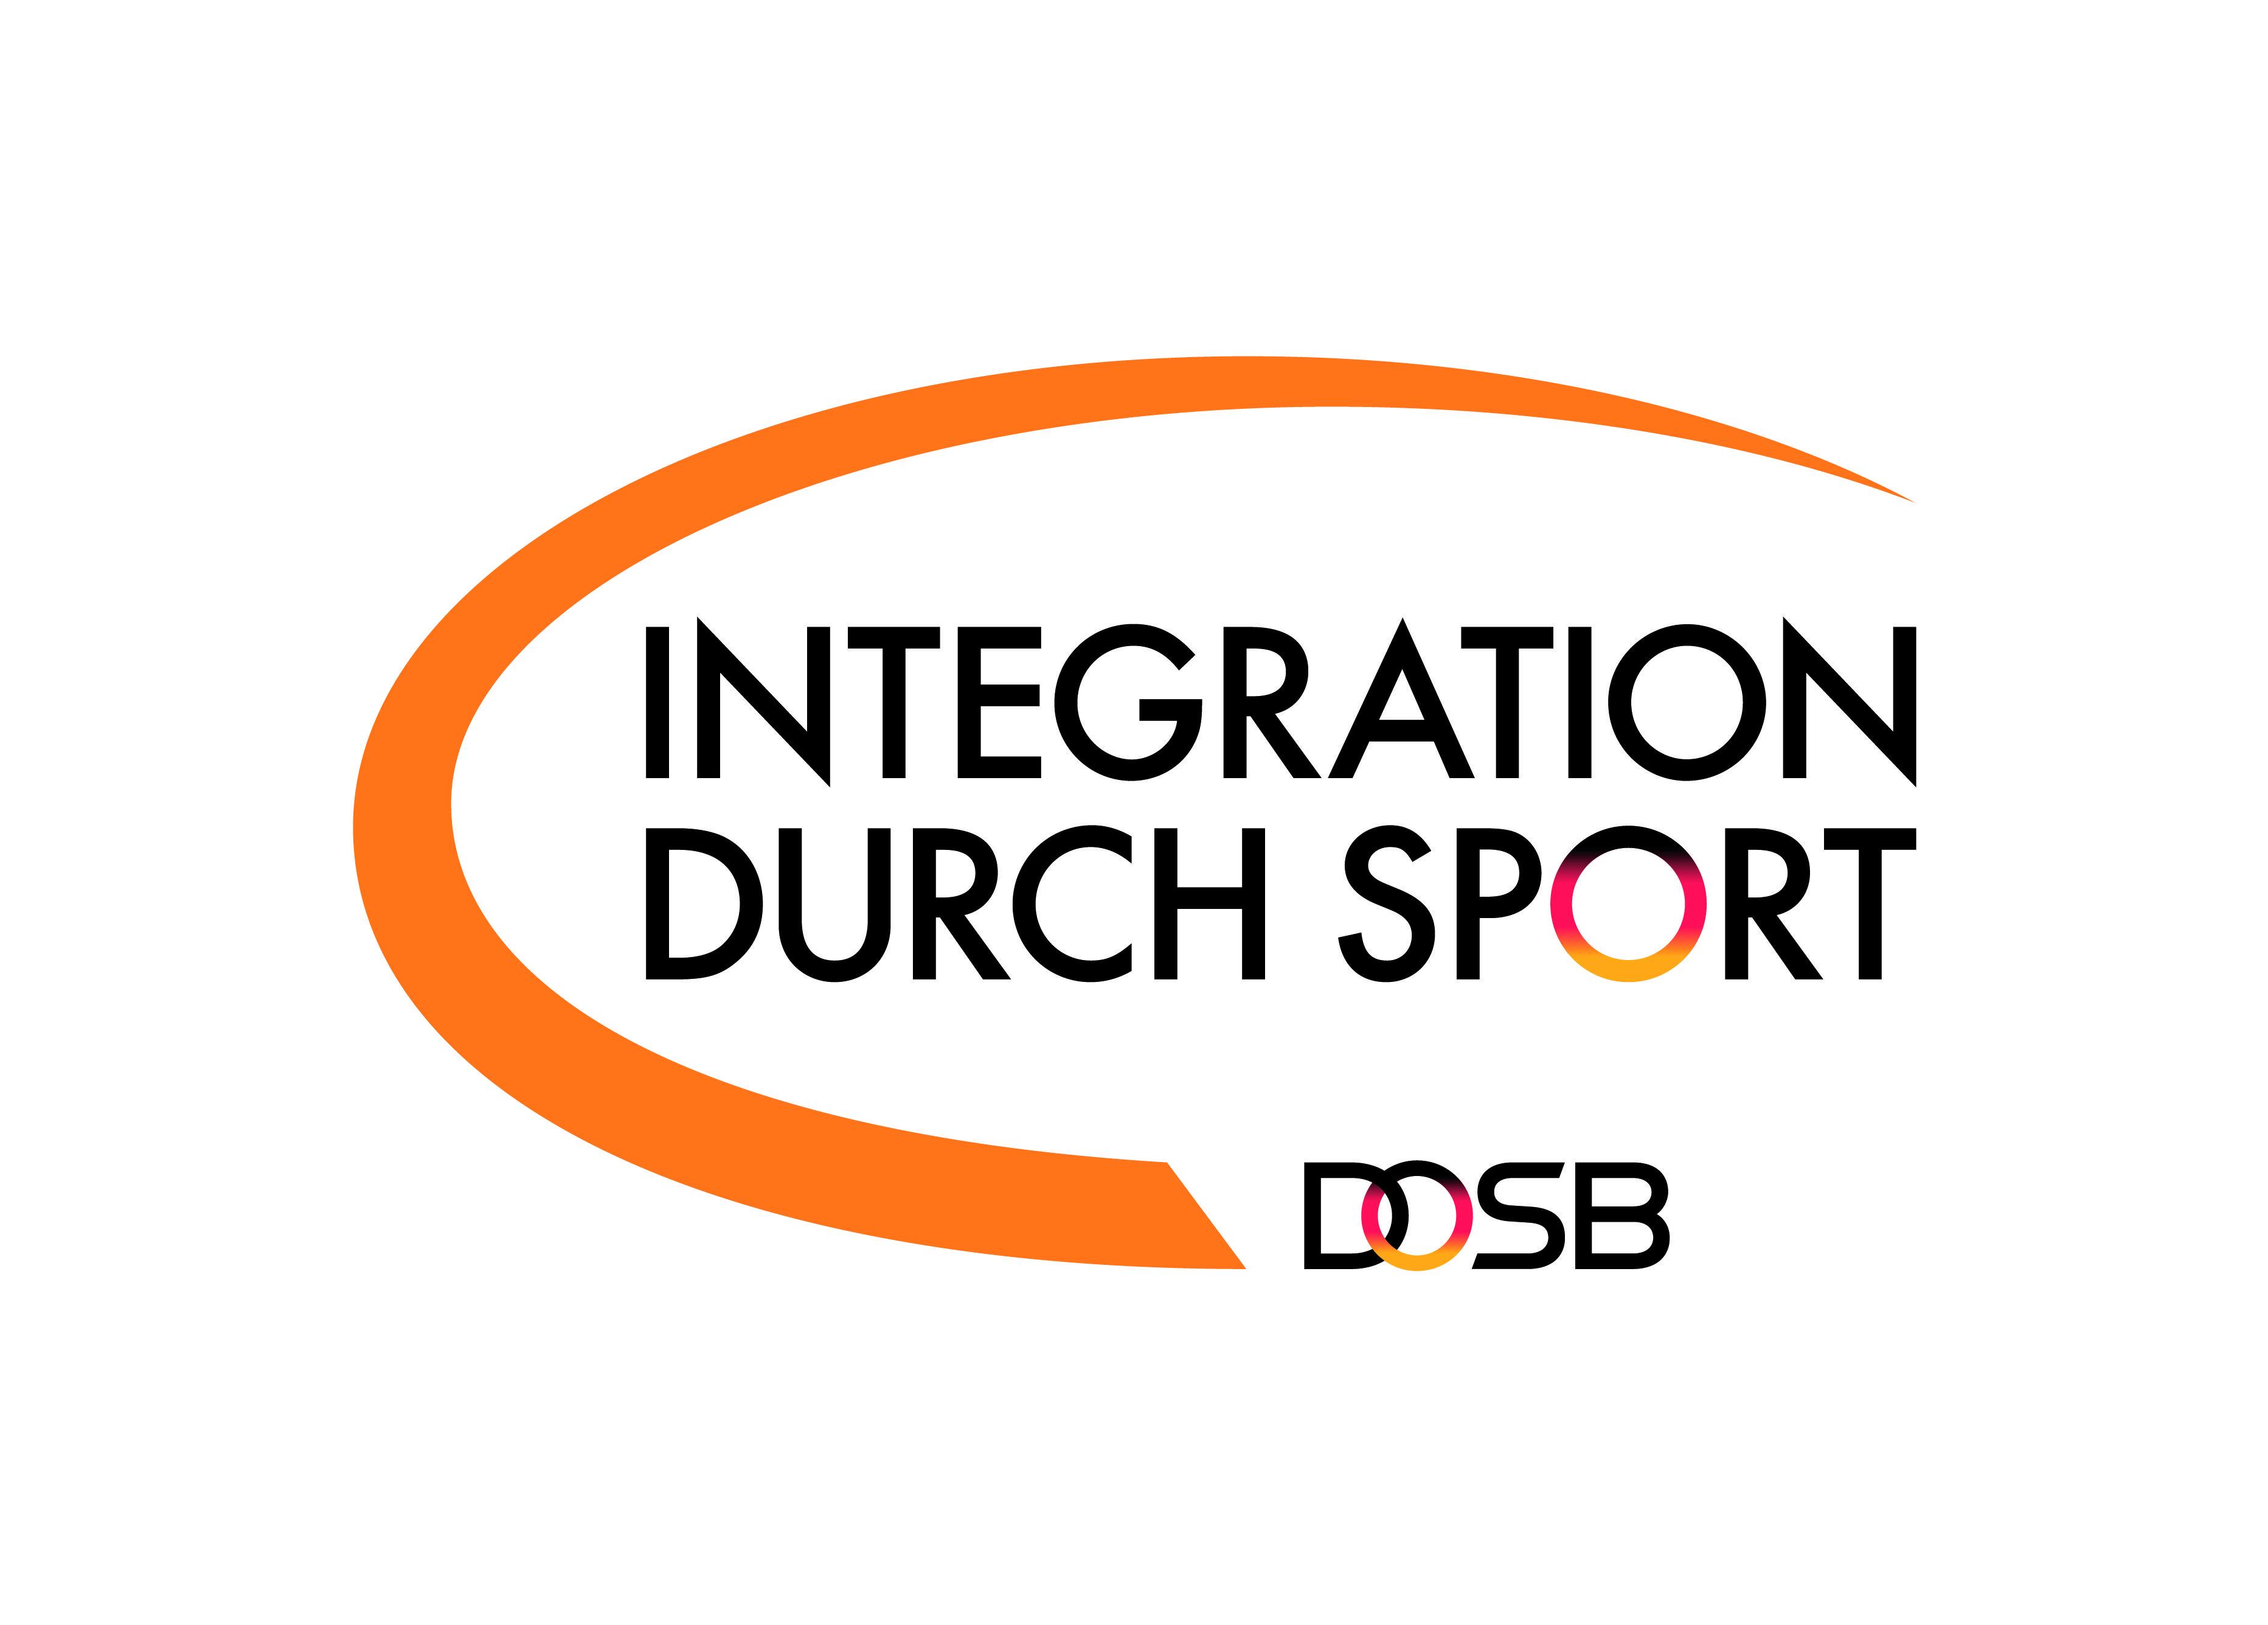 Logo_Integration_durch_Sport